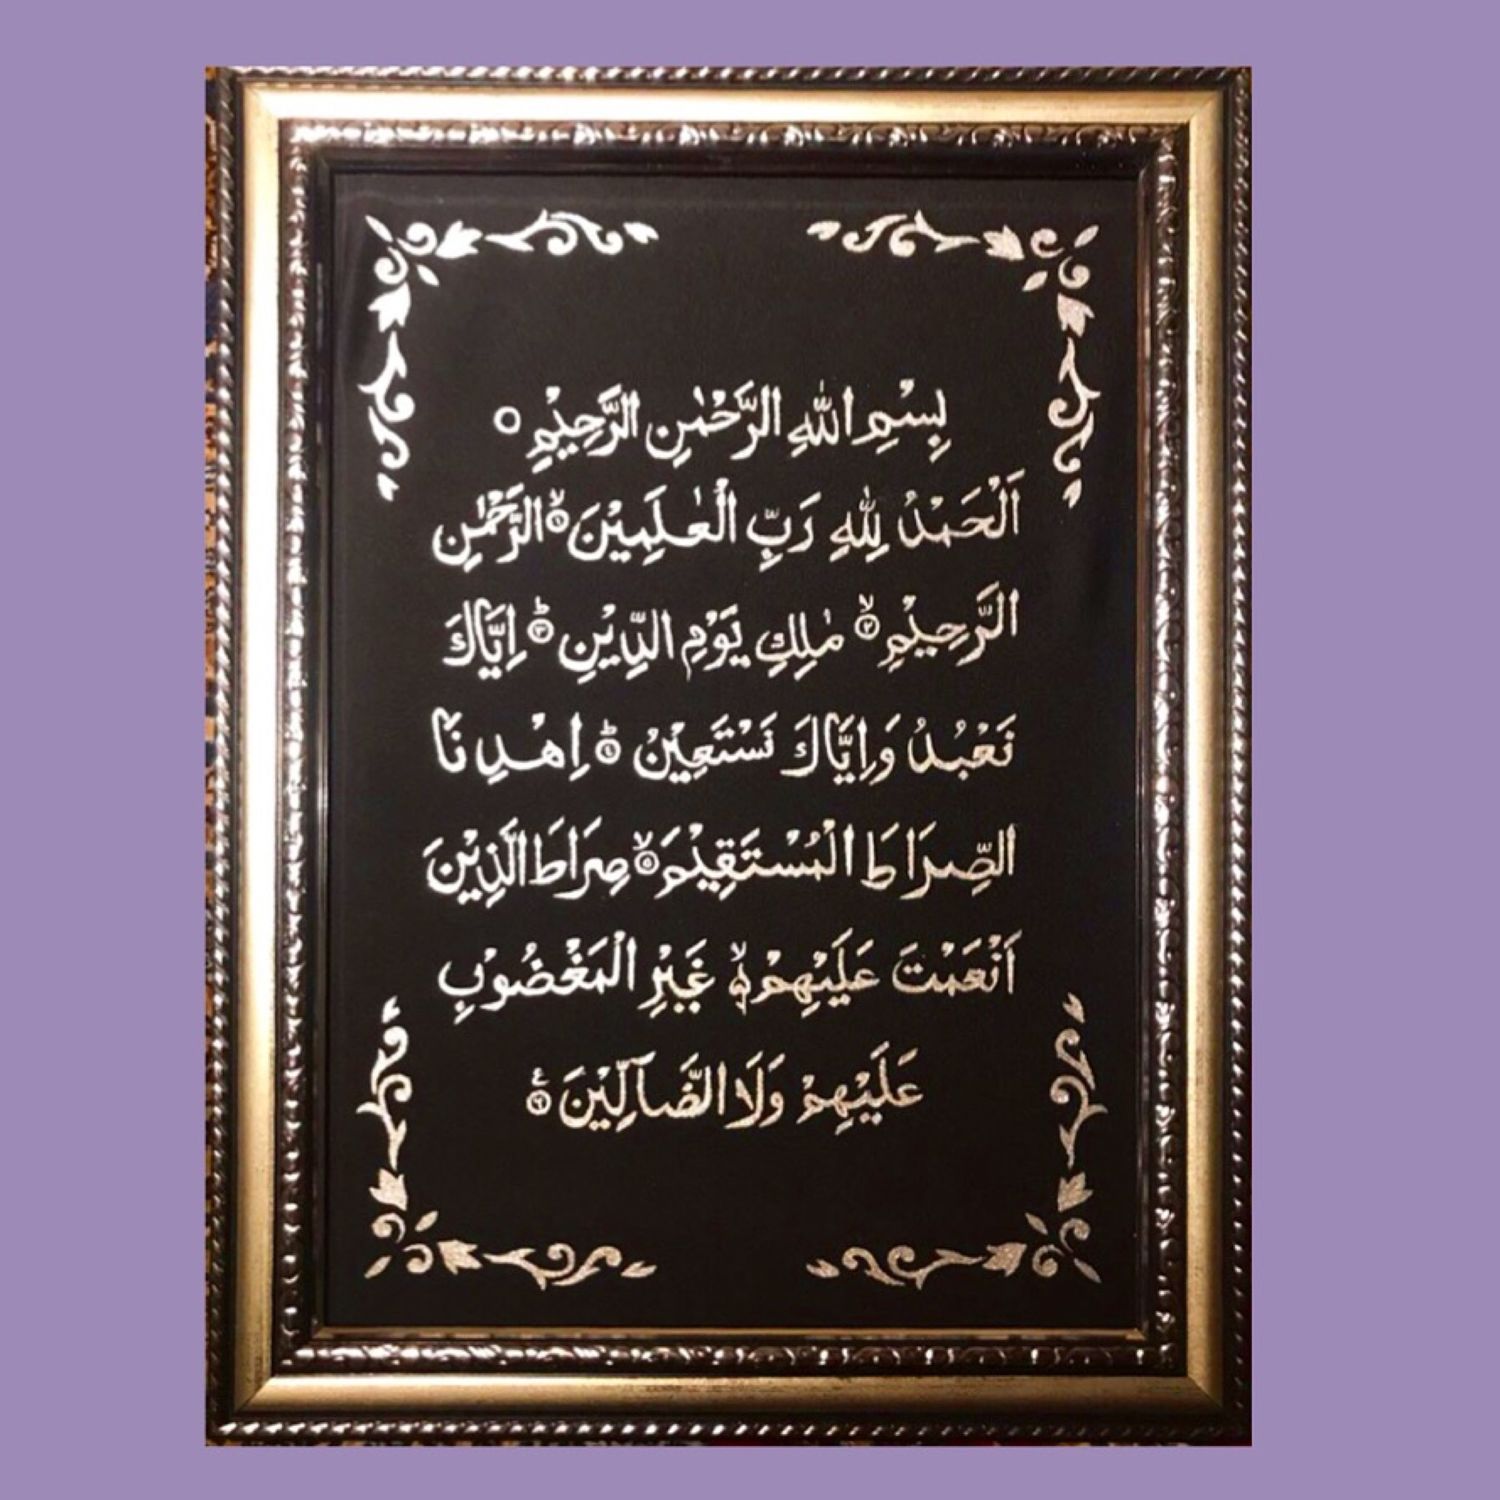 Аль фатиха на арабском слушать. Сура Аль Фатиха. Сура Аль Фатиха каллиграфия. Первая Сура Корана. Коран Сура Аль Фатиха на арабском.